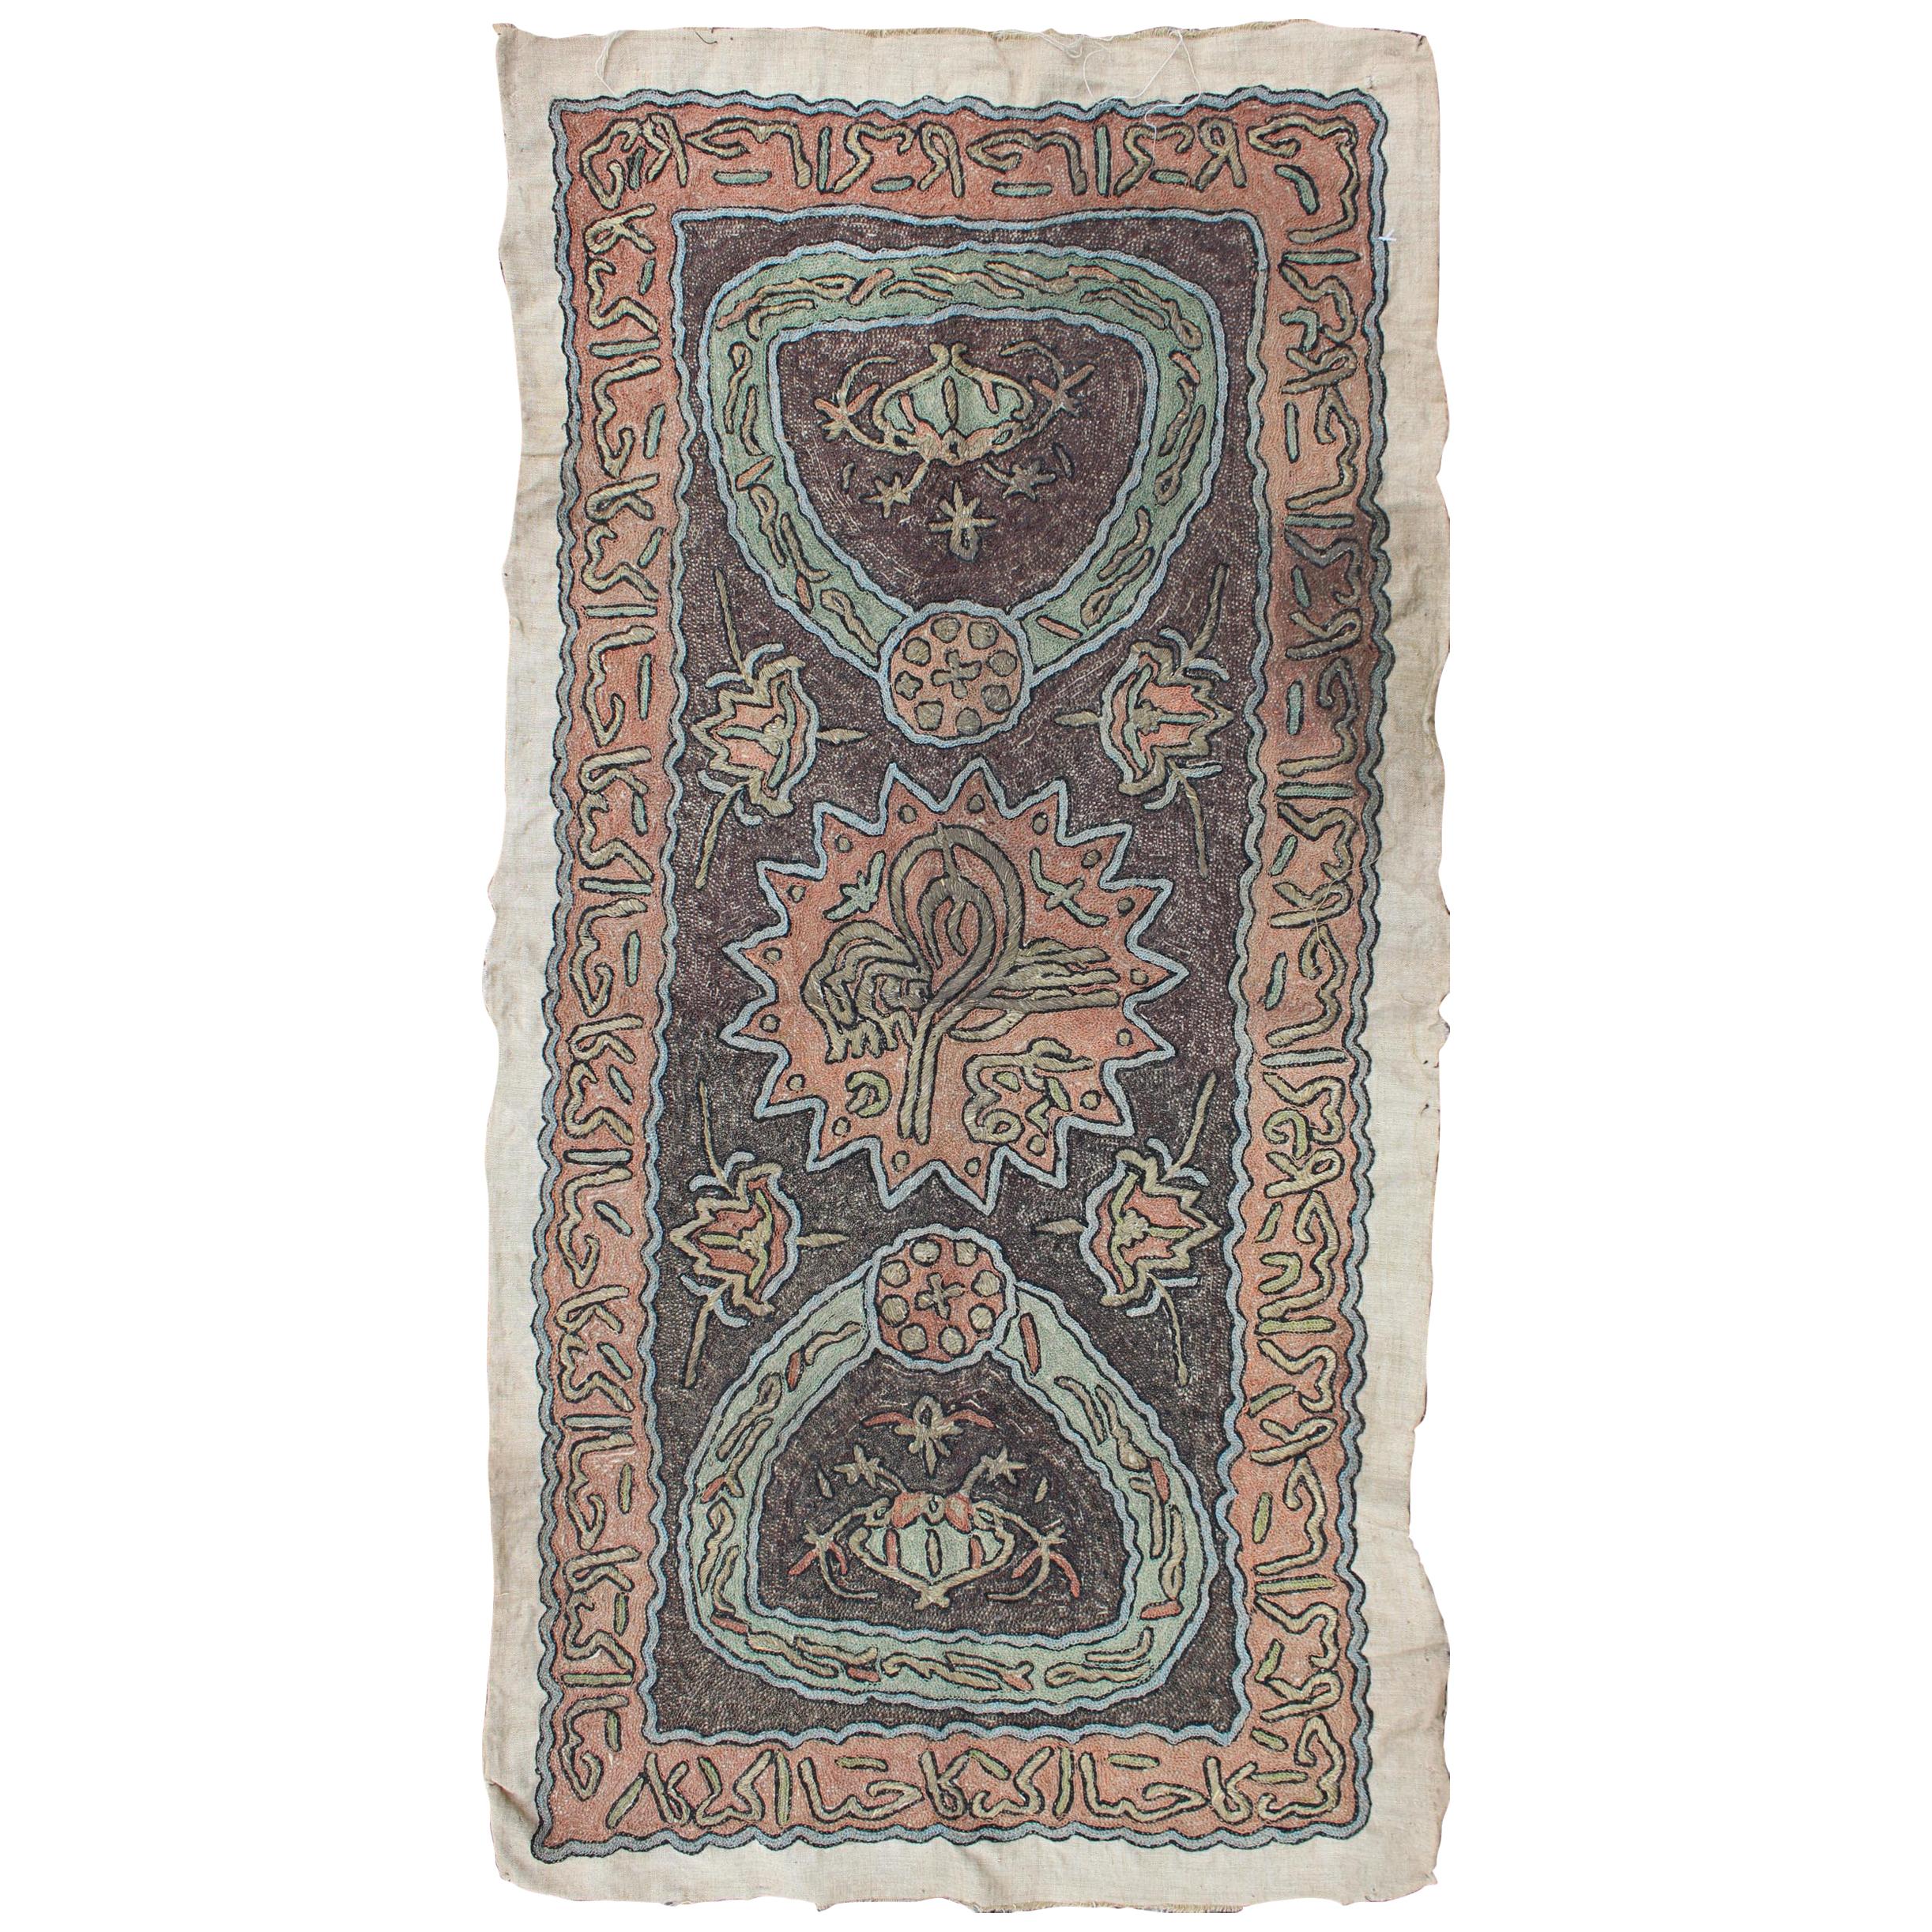 Antique Turkish Silk Ottoman Flat-Weave Rug with Unique Tribal Geometric Design